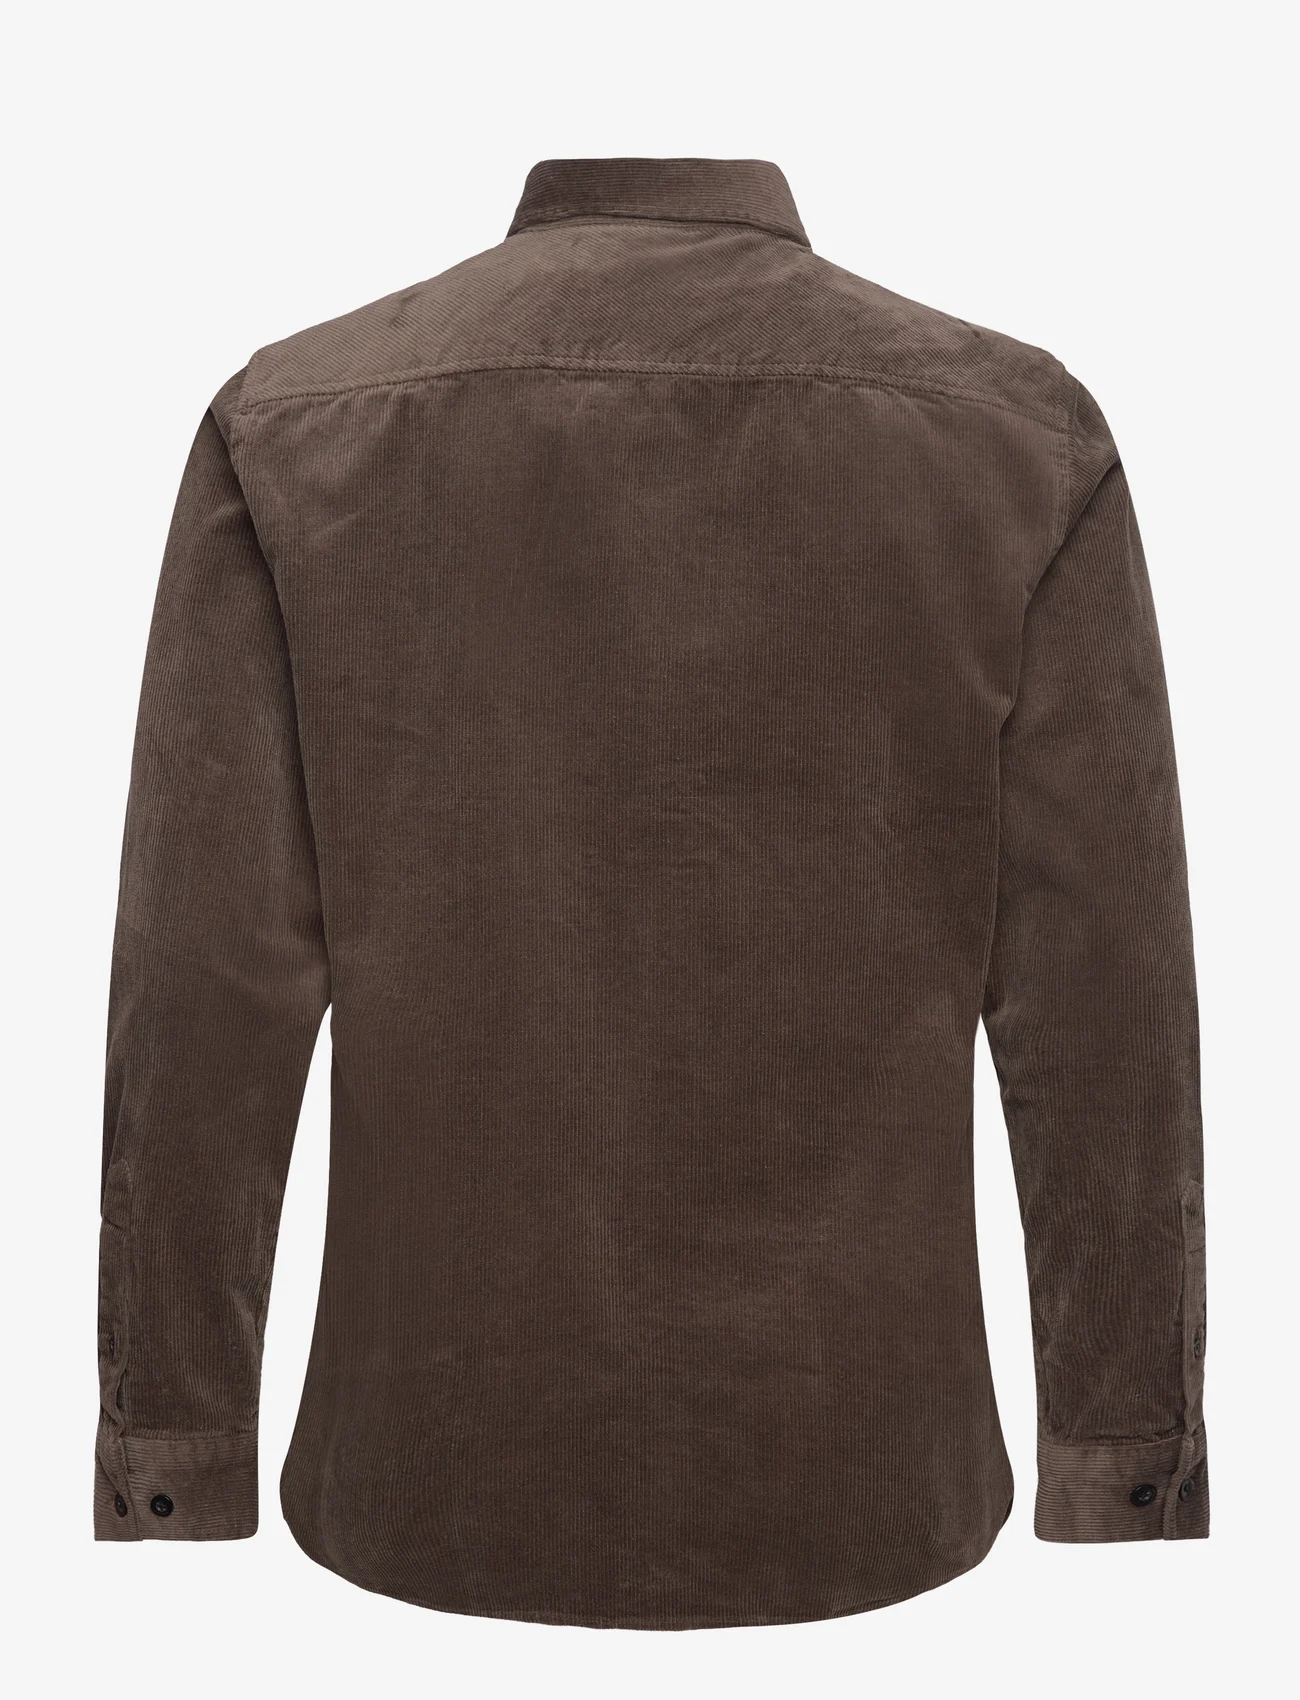 Anerkjendt - AKLEIF CORDUROY SHIRT - kordfløyelsskjorter - chocolate brown - 1